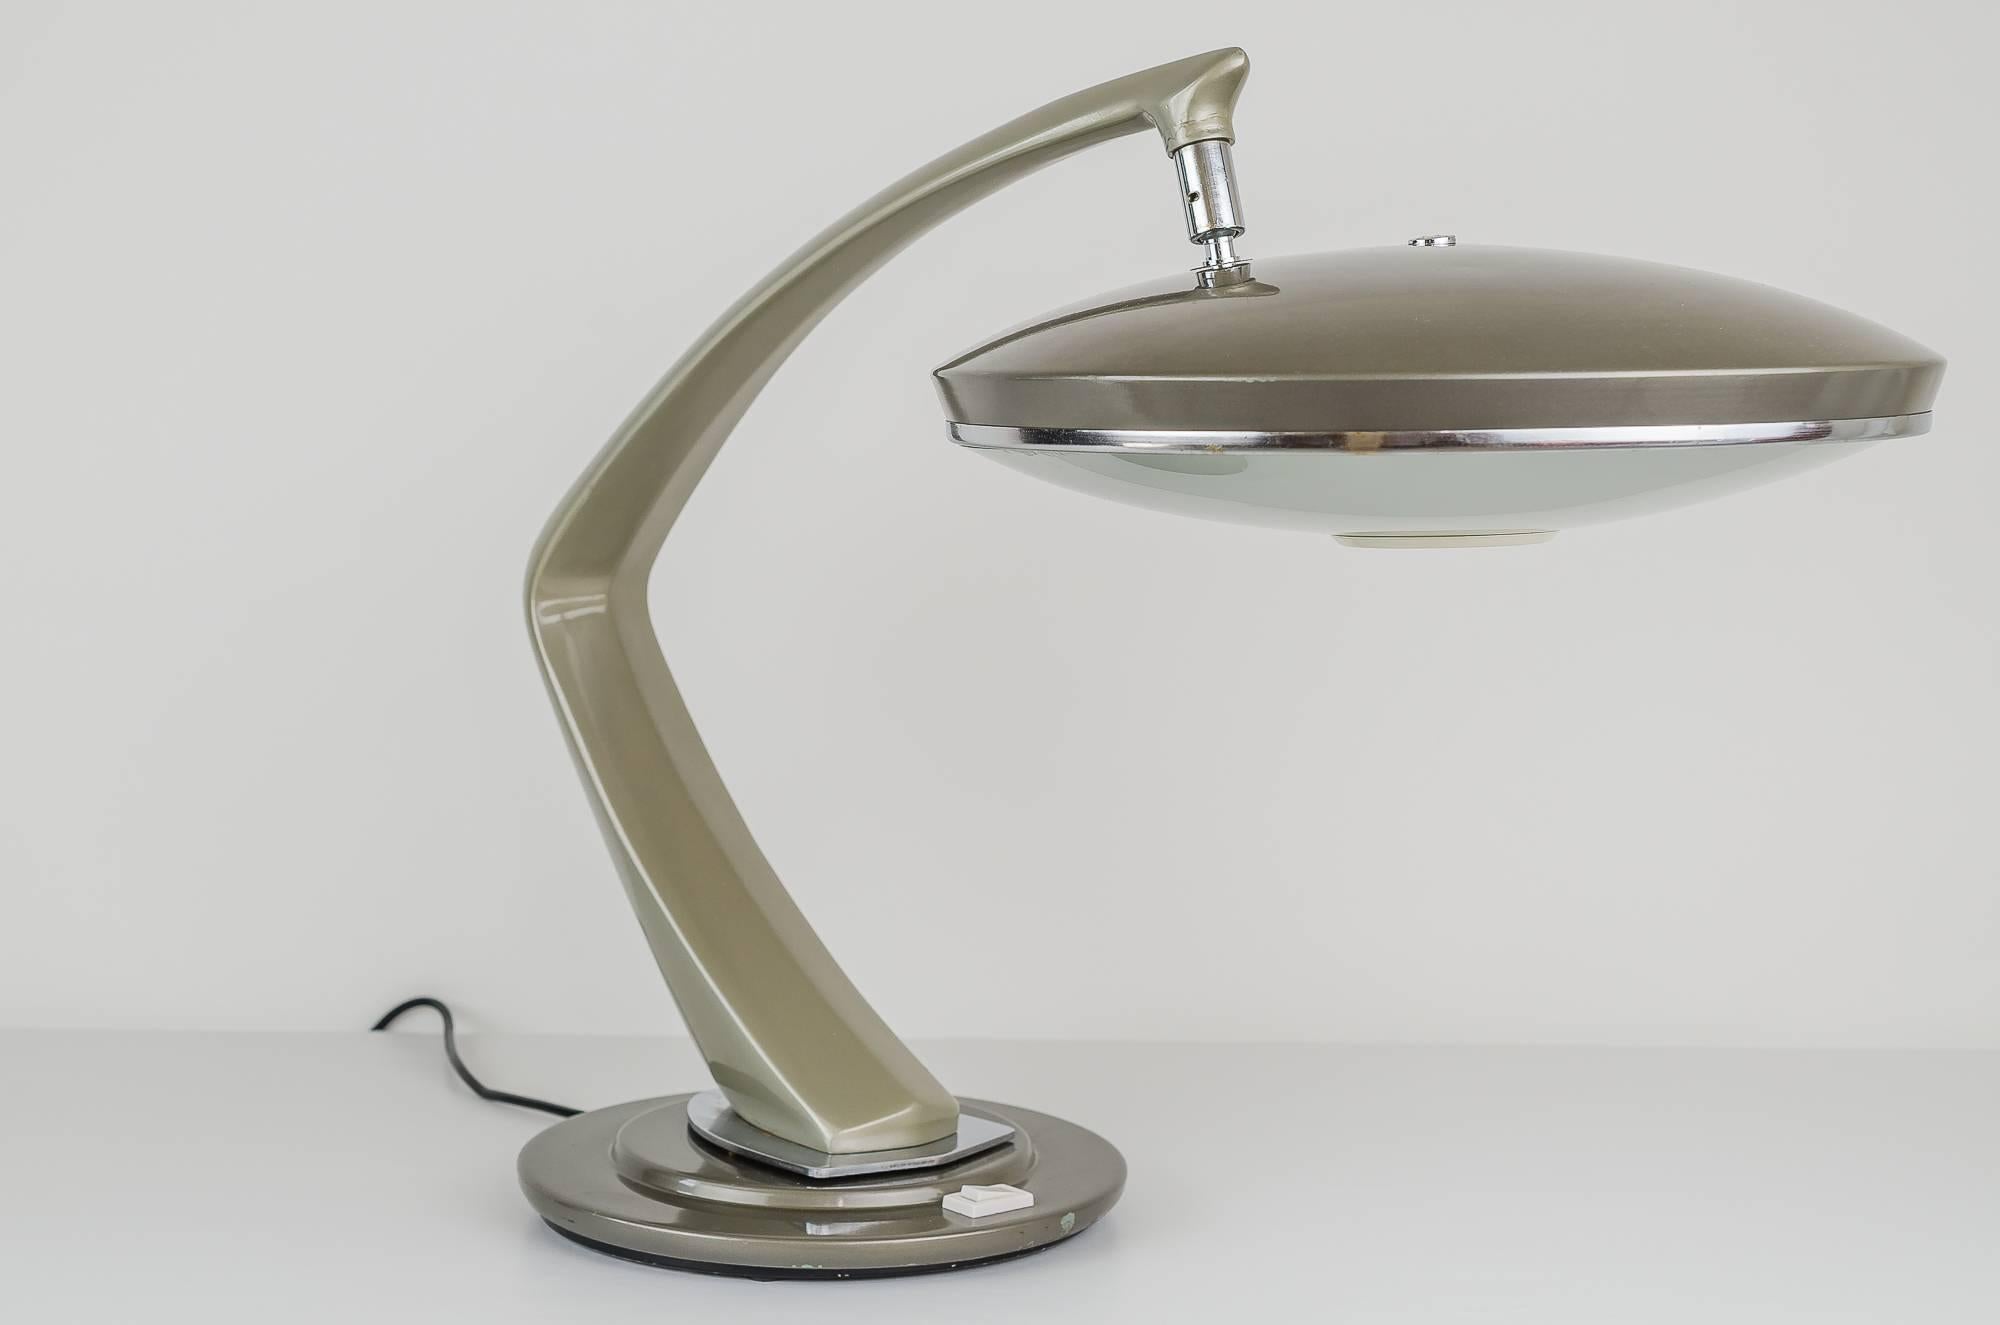 Lampe de table Raptek Milano, 1950s 
État original.